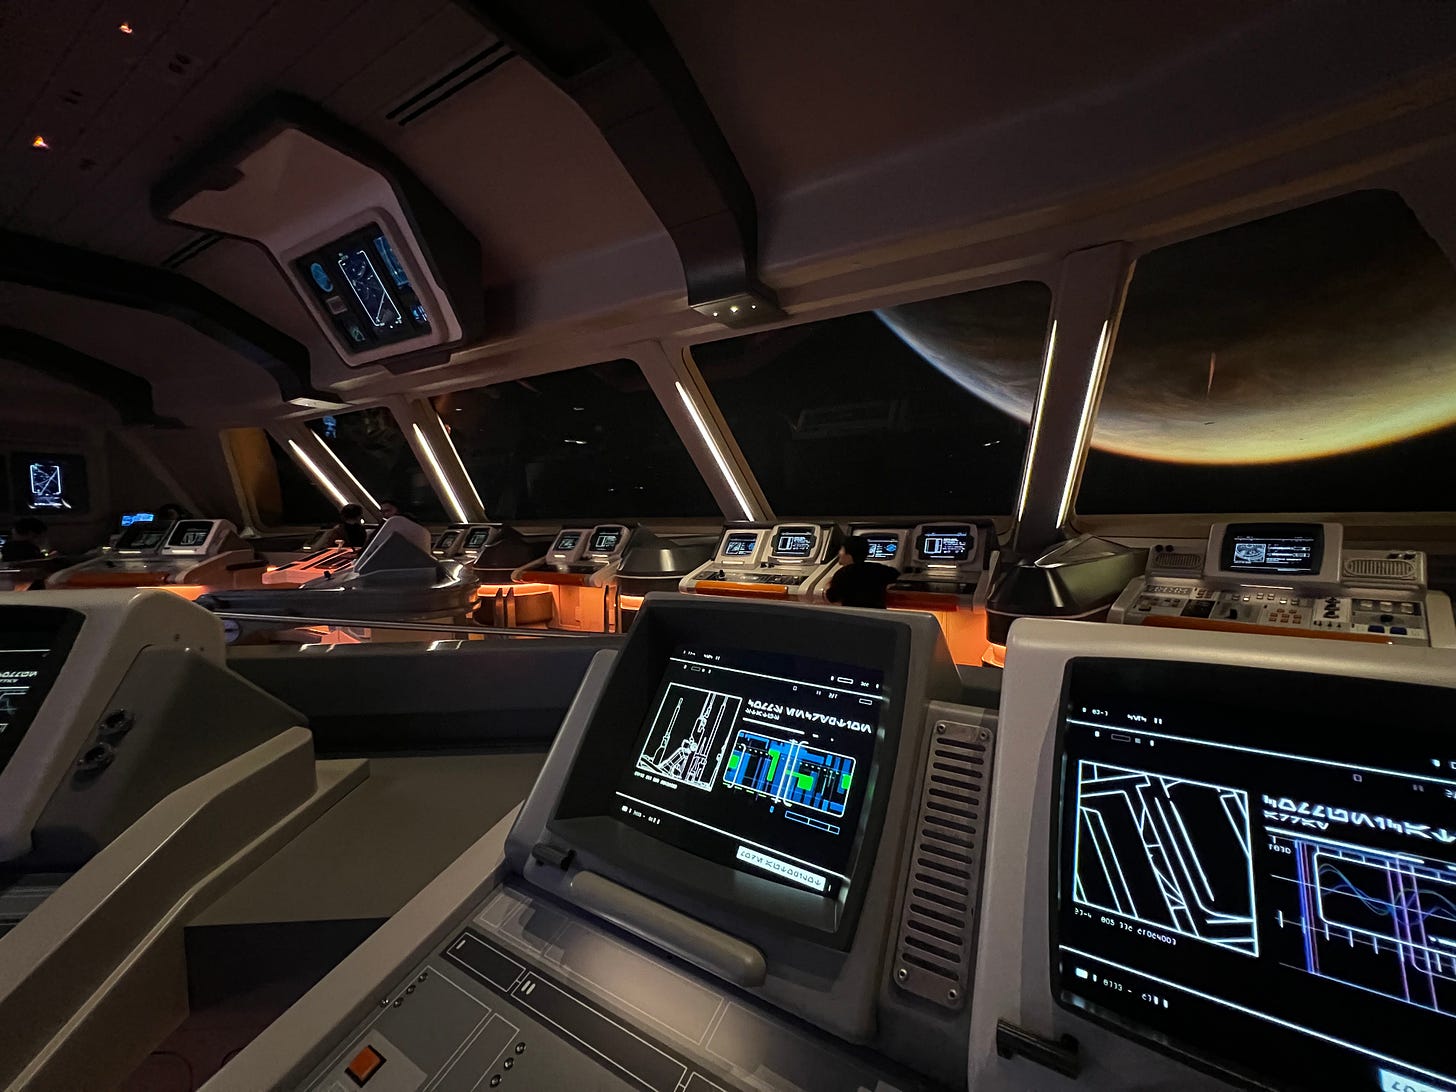 A spaceship bridge with computers